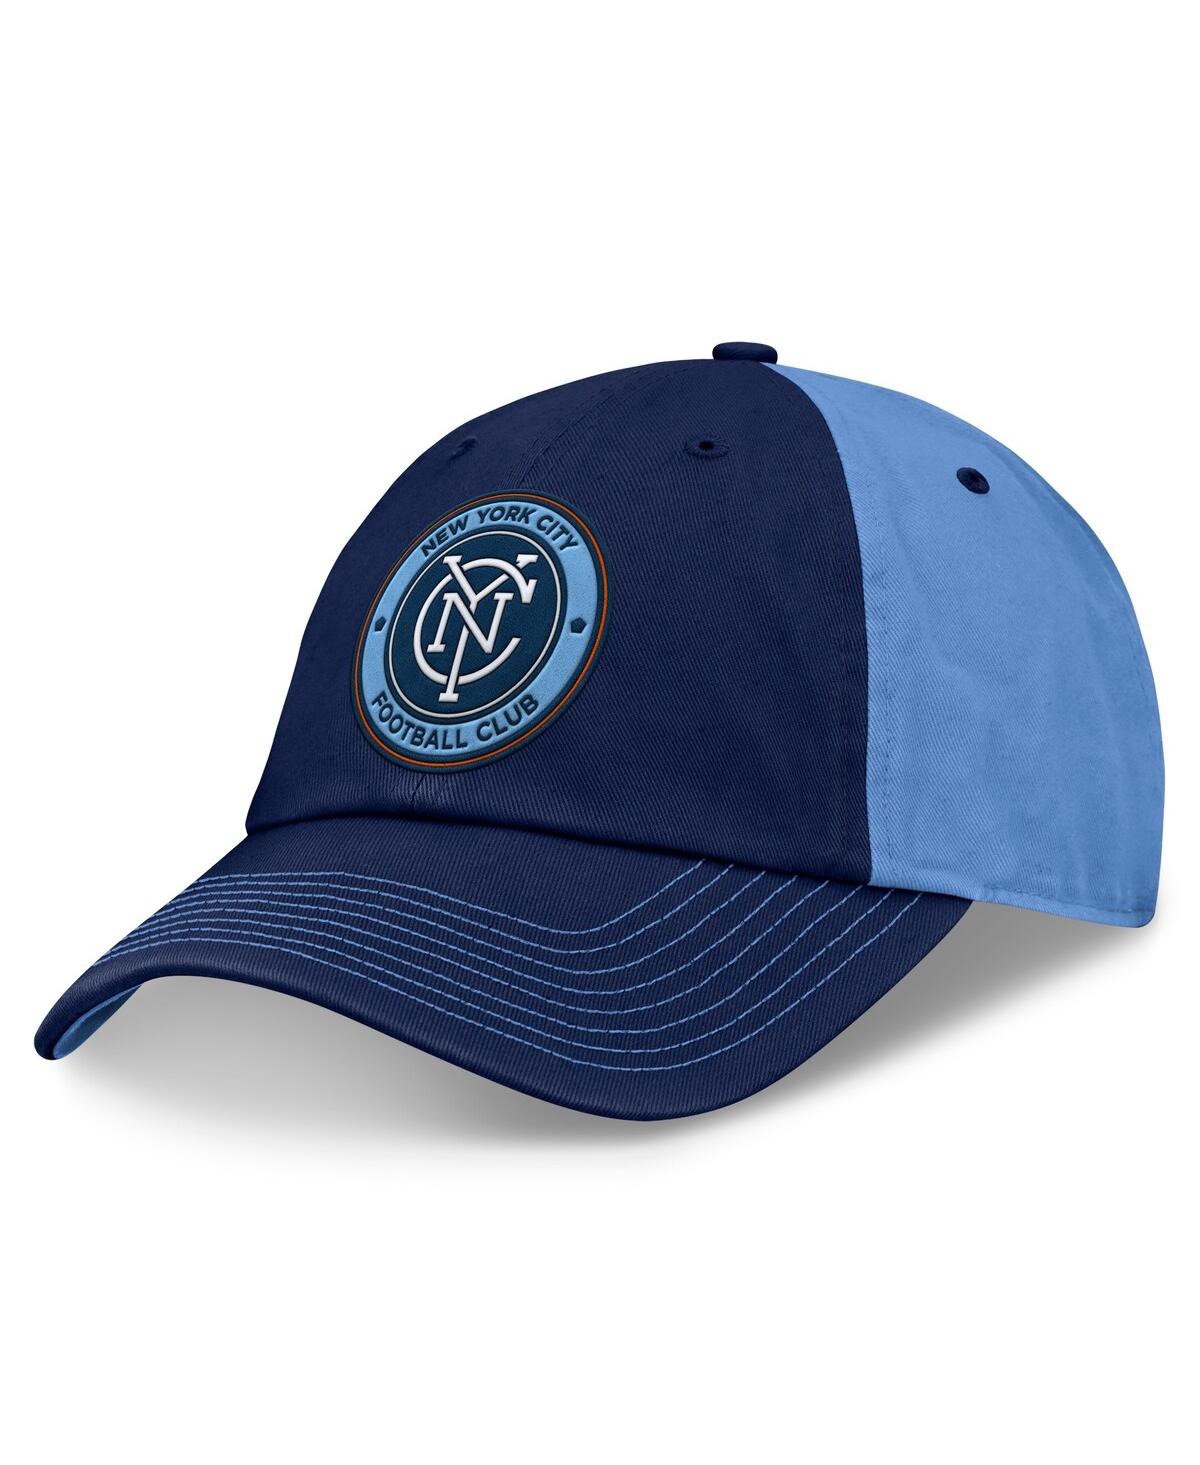 Men's Navy/Sky Blue New York City Fc Iconic Blocked Fundamental Adjustable Hat - Navy, Blue